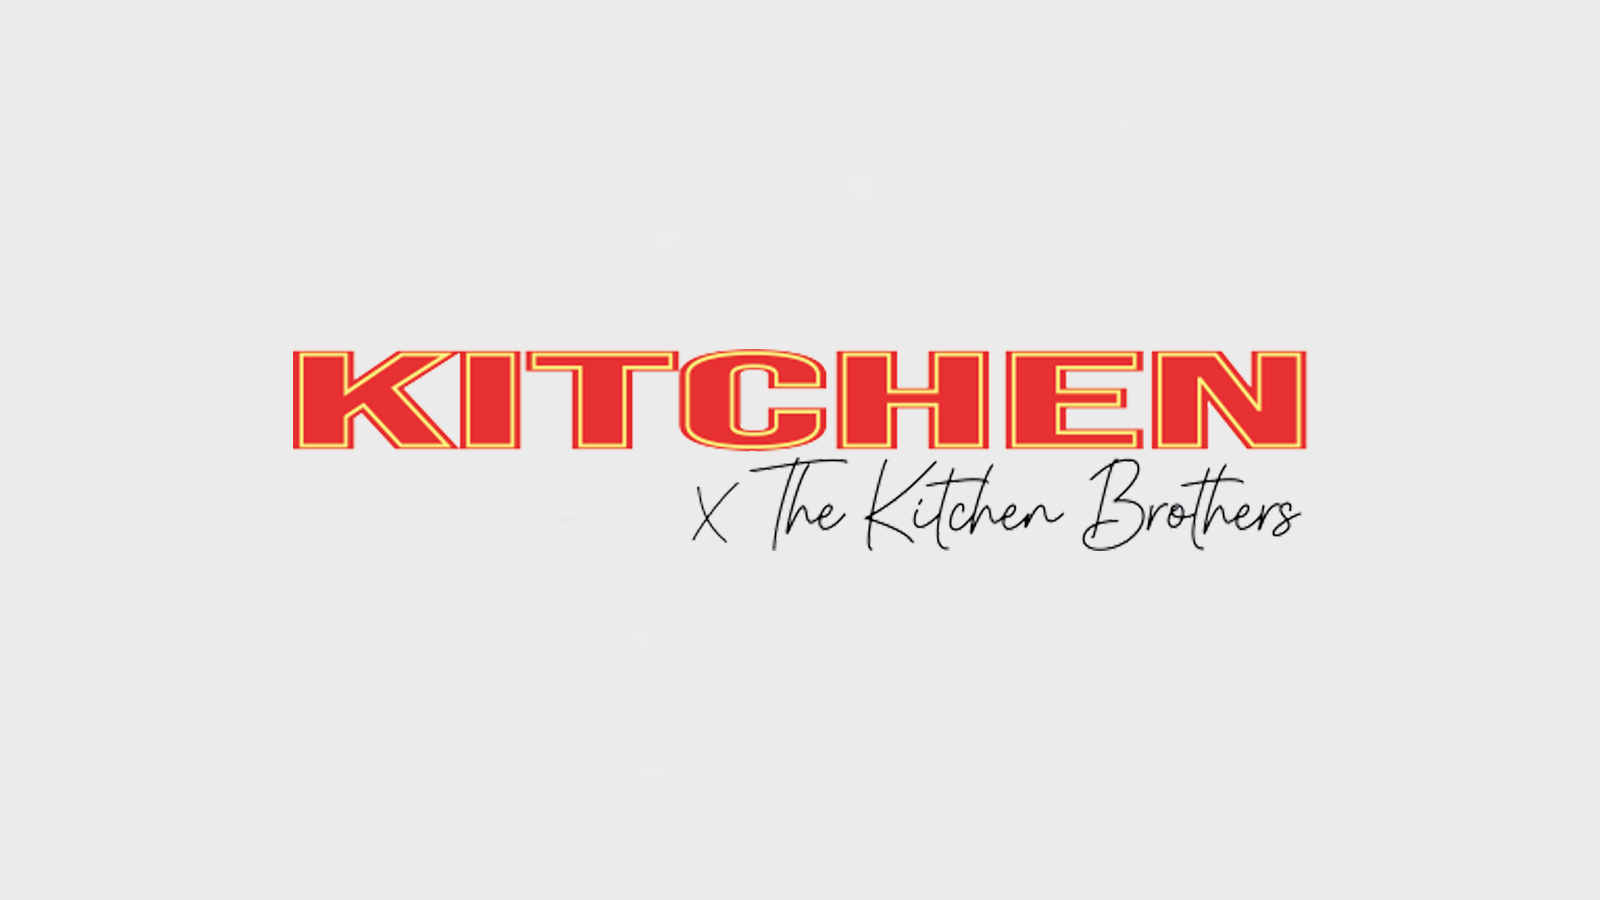 Kitchen logo